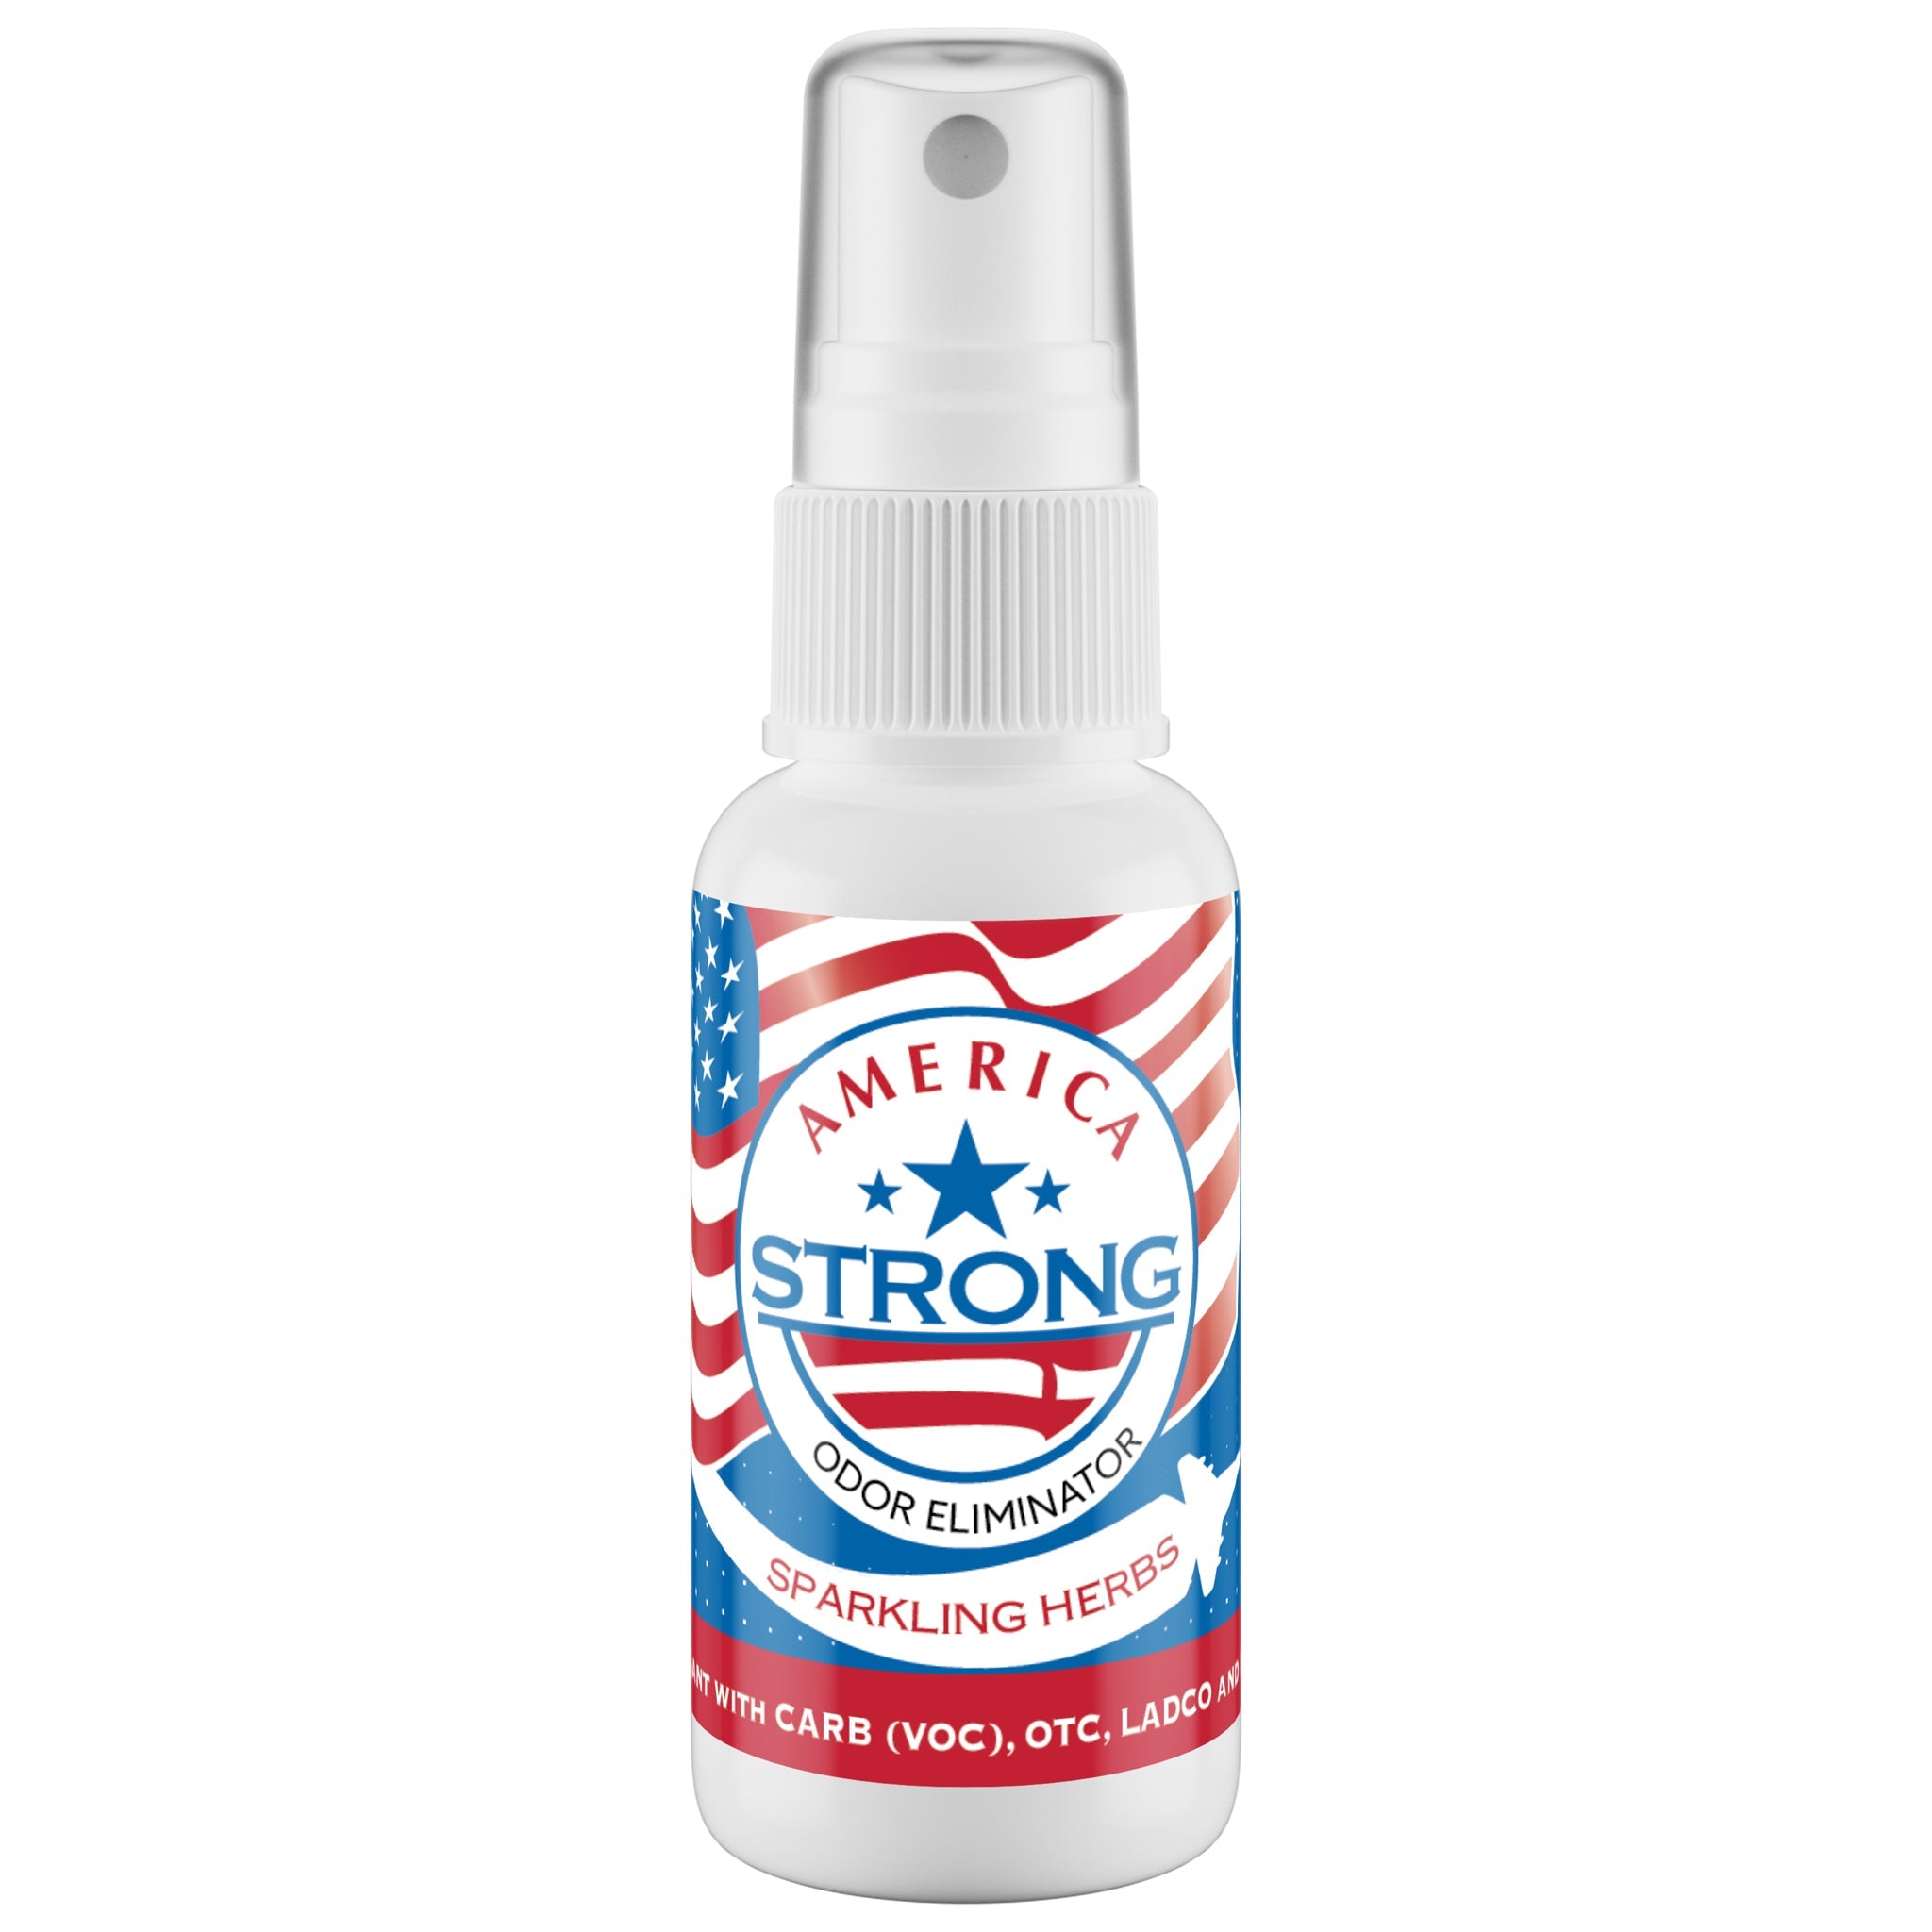 America Strong Odor Eliminator - Sparkling Herbs Scent Size: 1.5oz